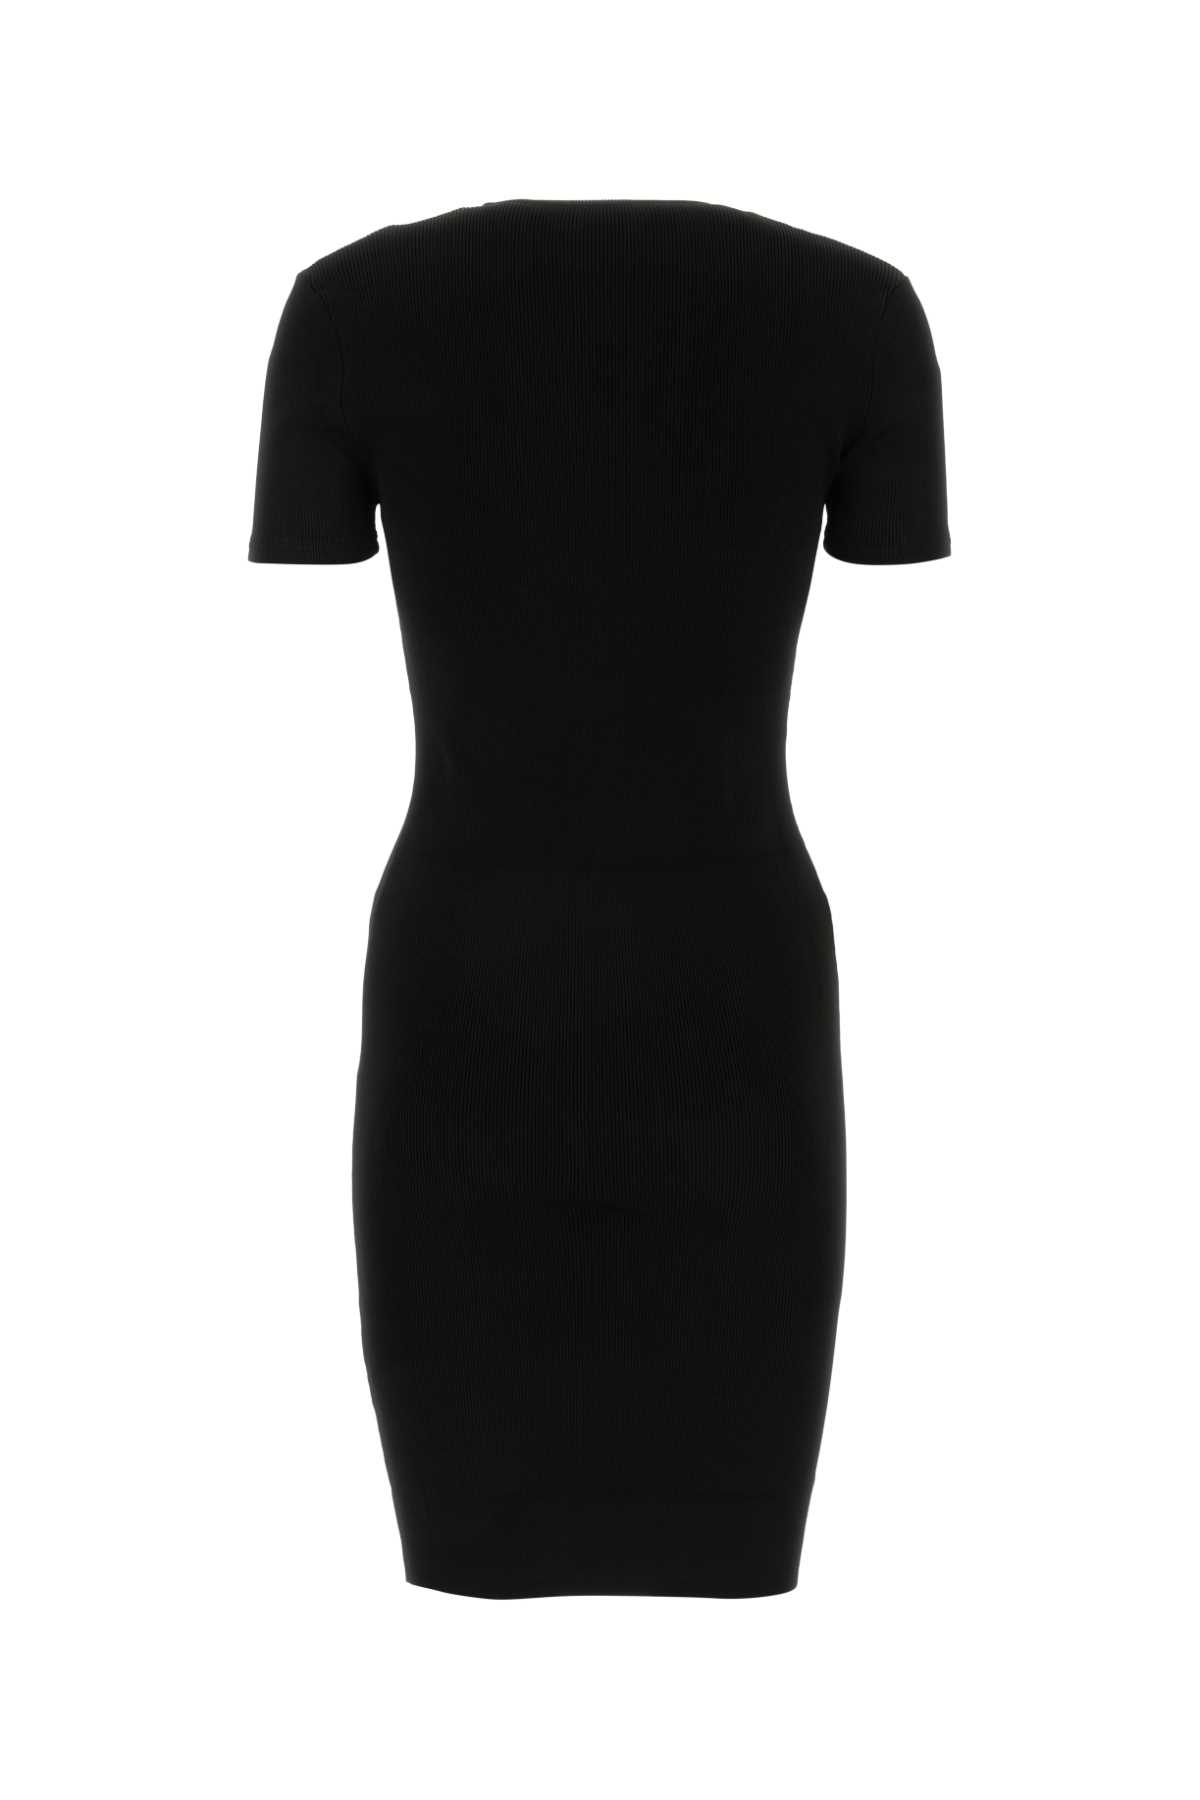 Shop Givenchy Black Stretch Viscose Blend Mini Dress